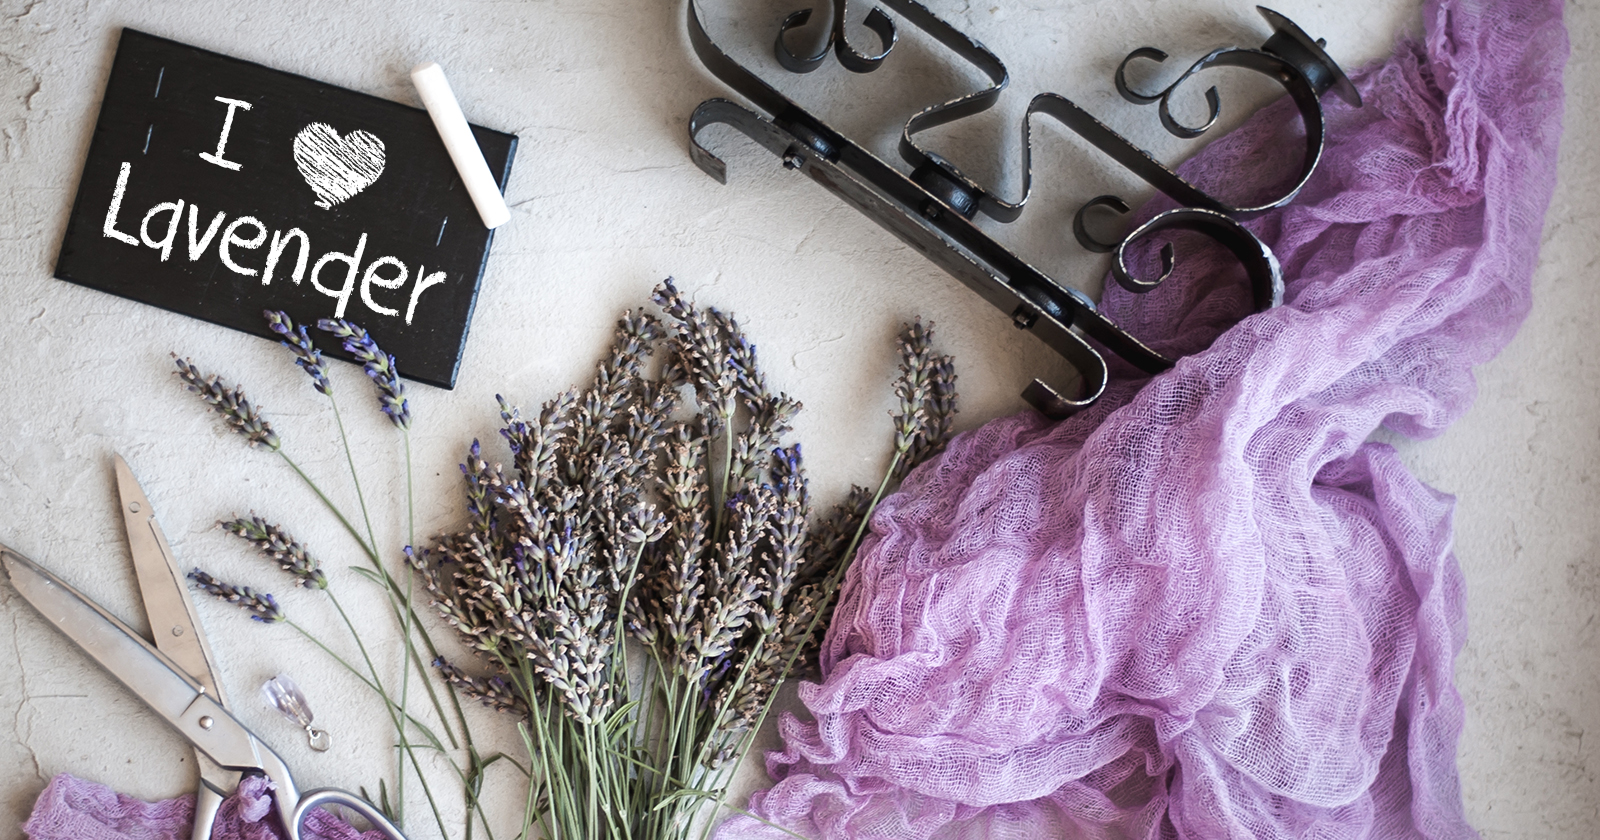 SS’18: Lavender Hue All Set to Take Over! #Trendalert #teaser